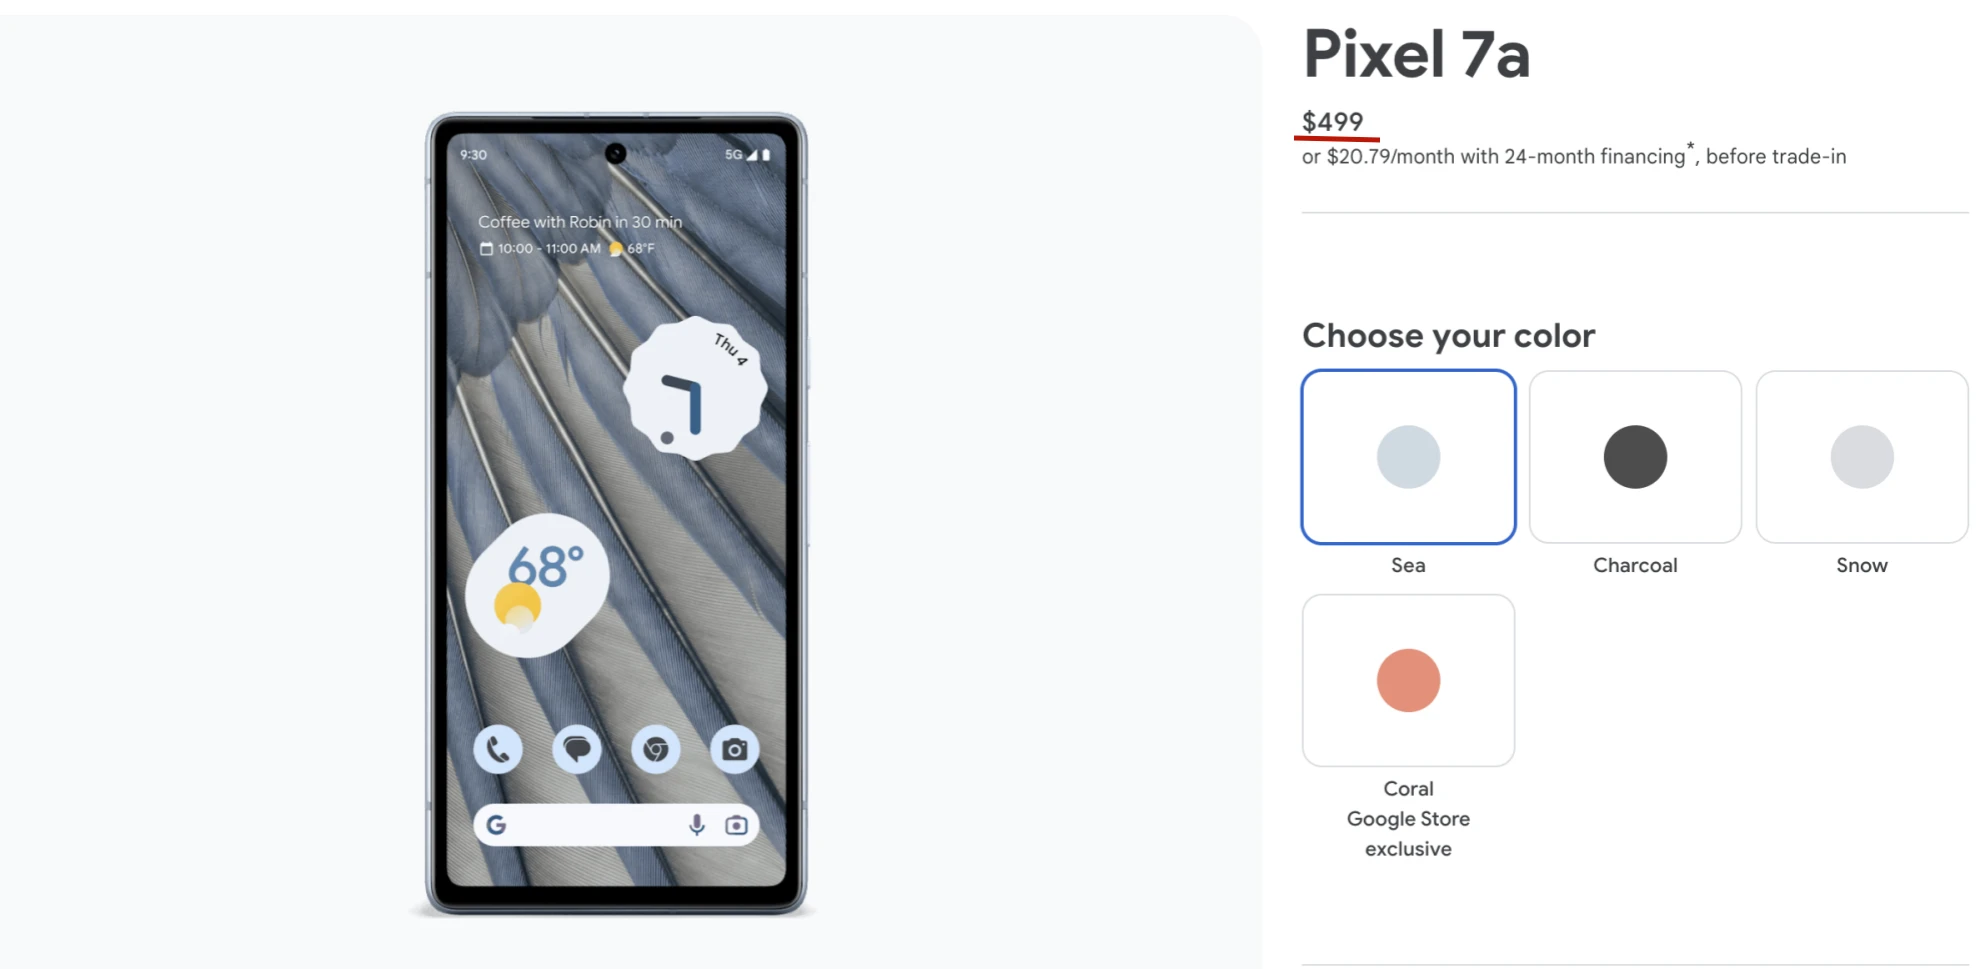 Google美国官方商店Pixel 7a价格恢复499美元 黑色星期五或降价超125美元